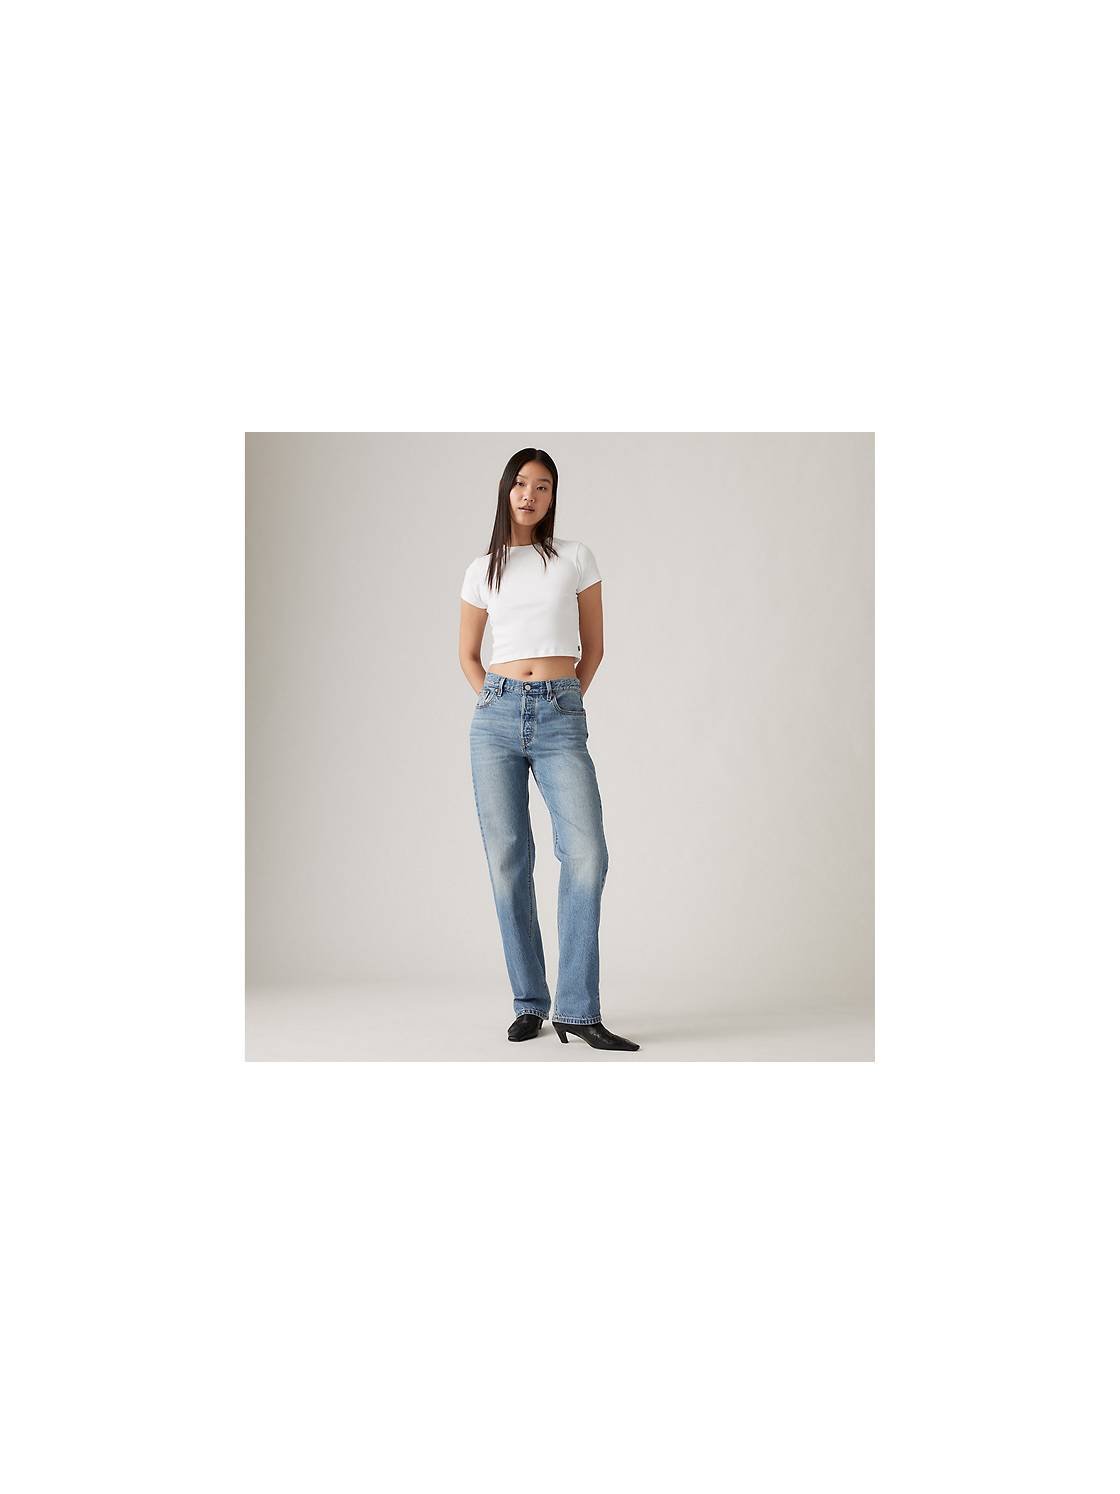 Levi's 501® Jeans for Women - The Original Button Fly | Levi's® US